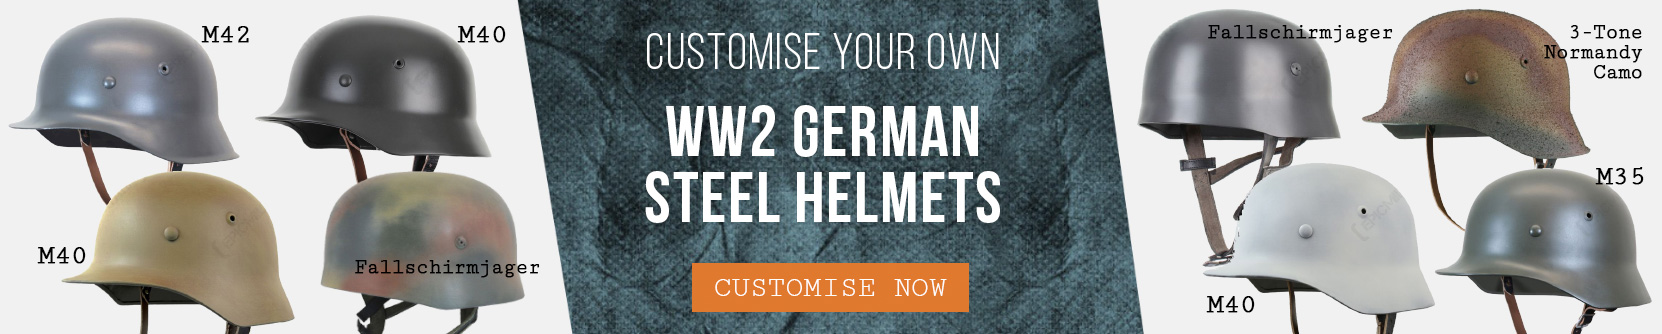 Epic Militaria Customise Your Own Helmet